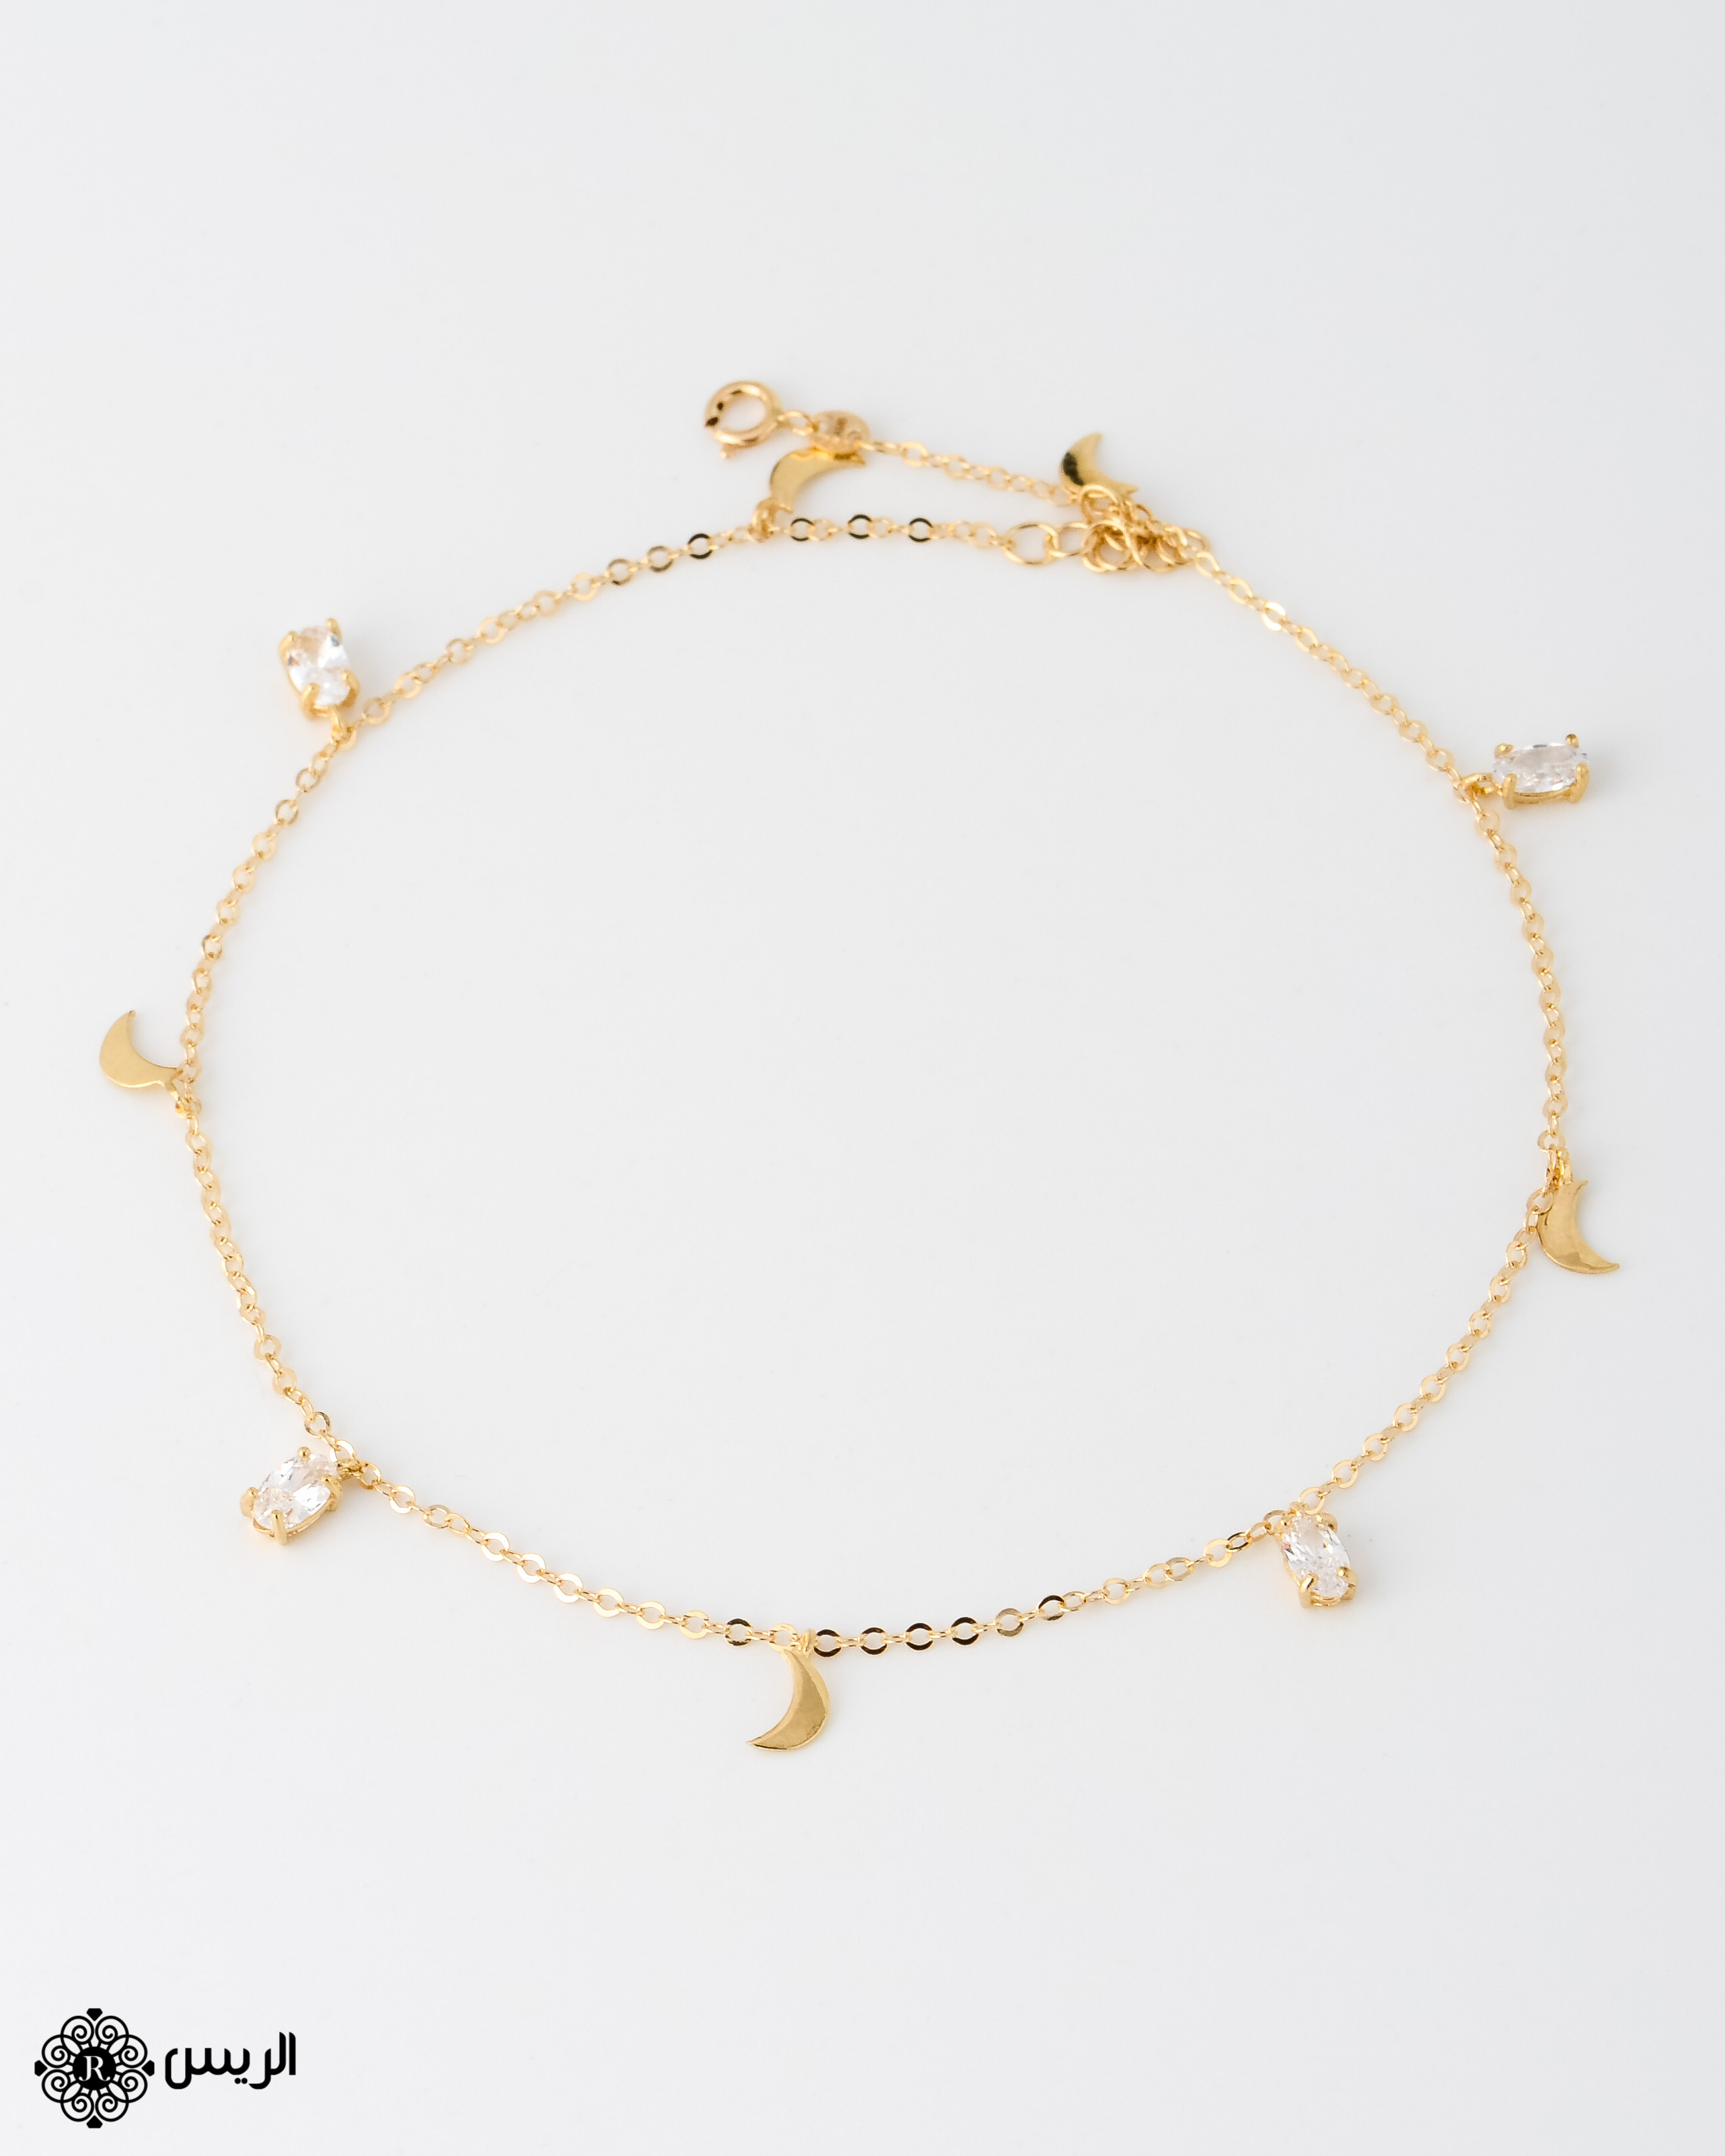 Raies jewelry Delicate Anklet with Swarovski خلخال ناعم بفصوص Swarovski الريس للمجوهرات